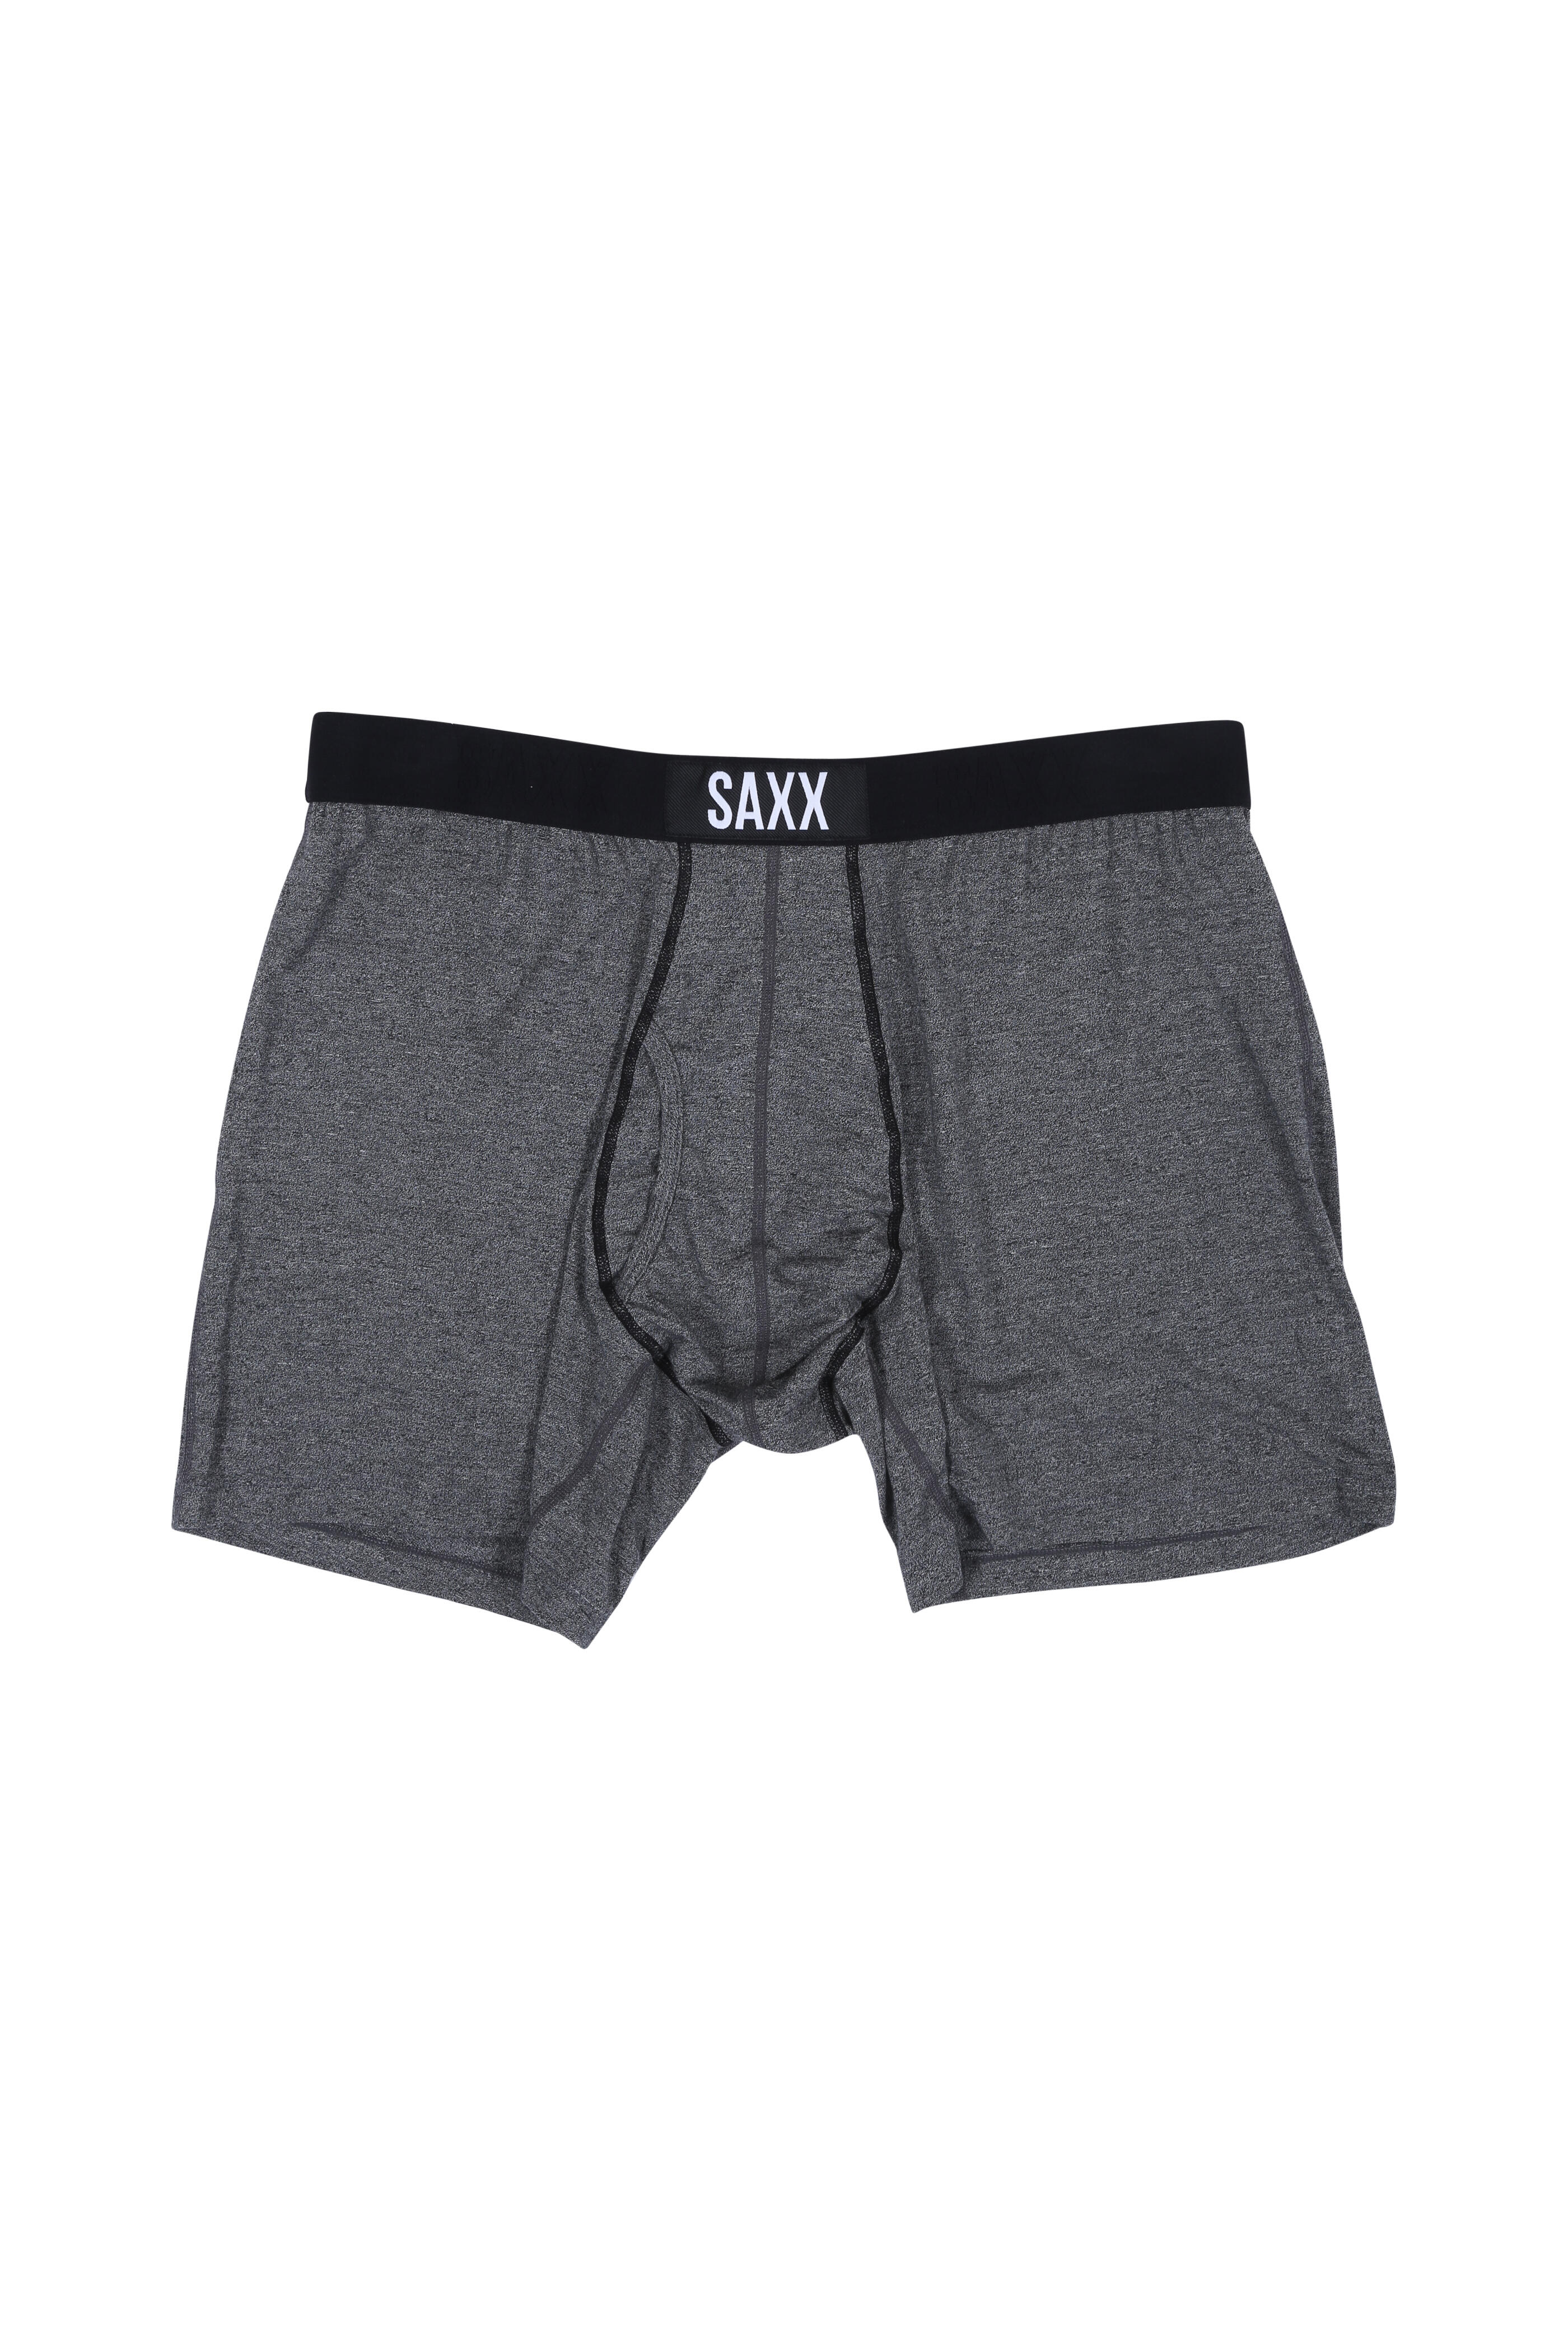 Saxx Underwear - Ultra Gray Fit Boxer Brief